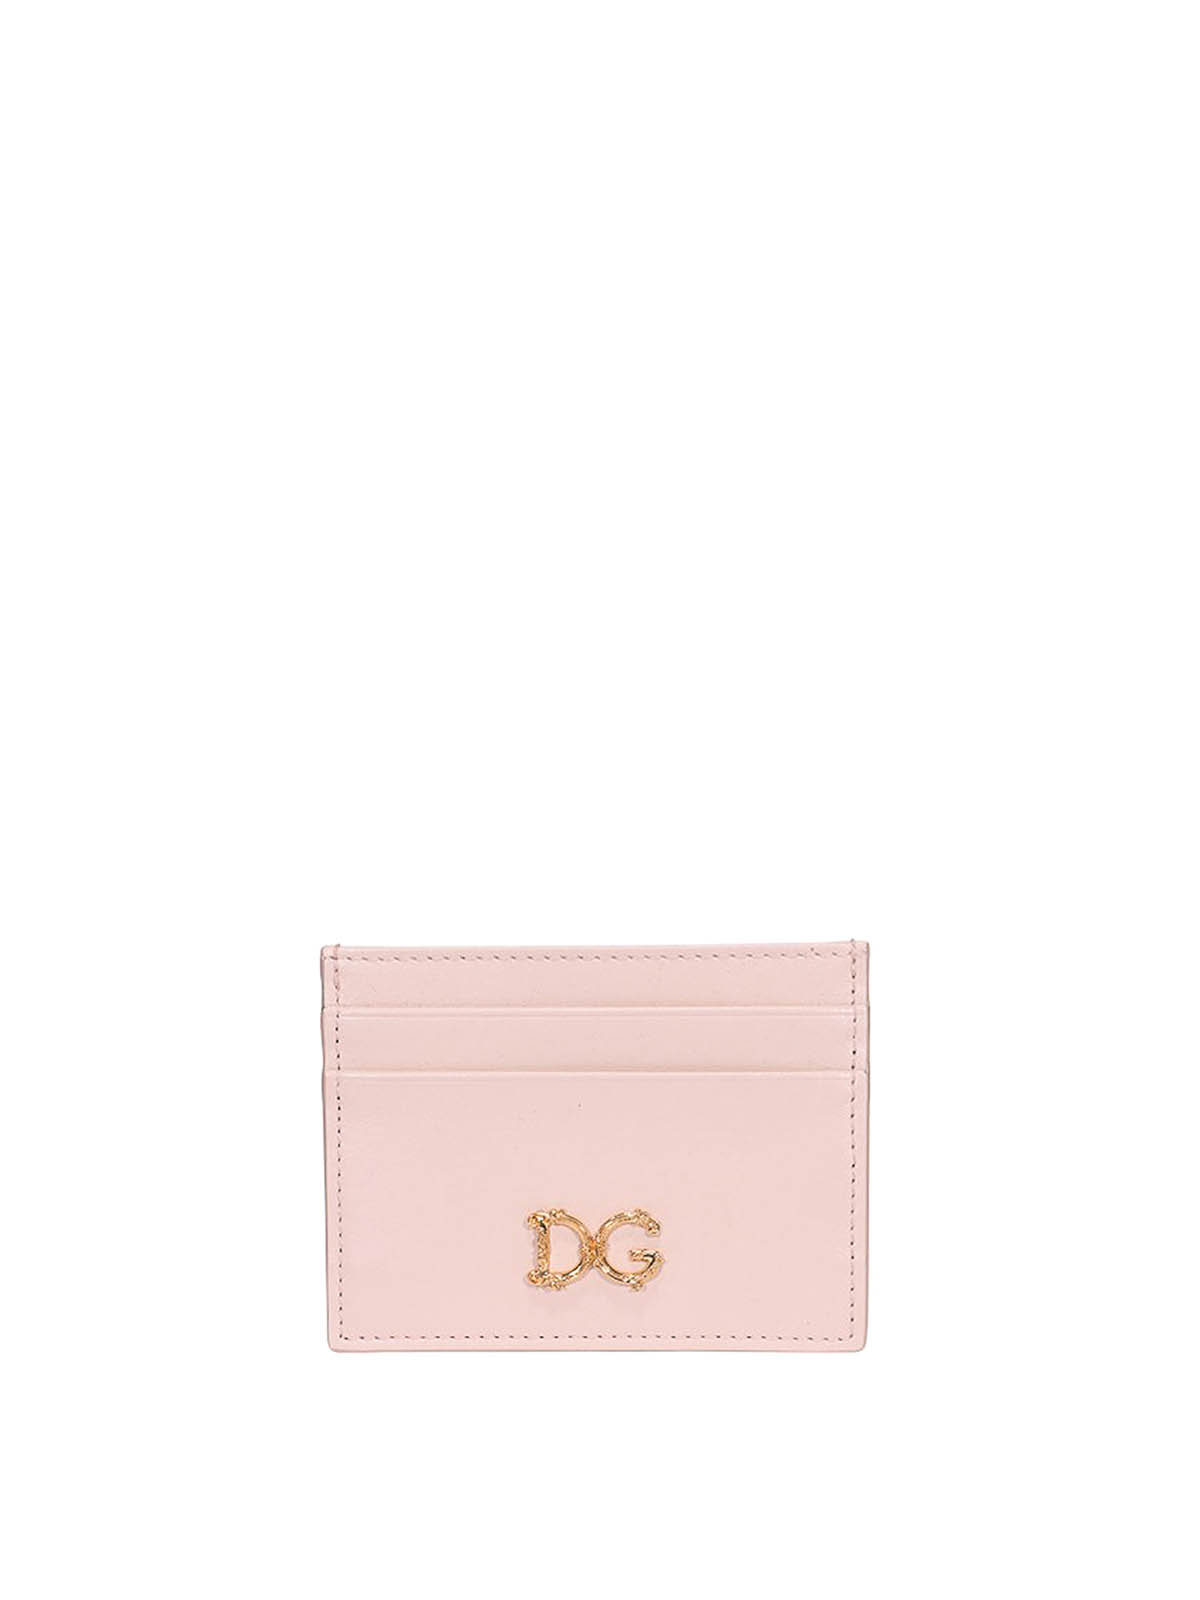 Dolce & Gabbana Lanyard Leather Cardholder - ShopStyle Wallets